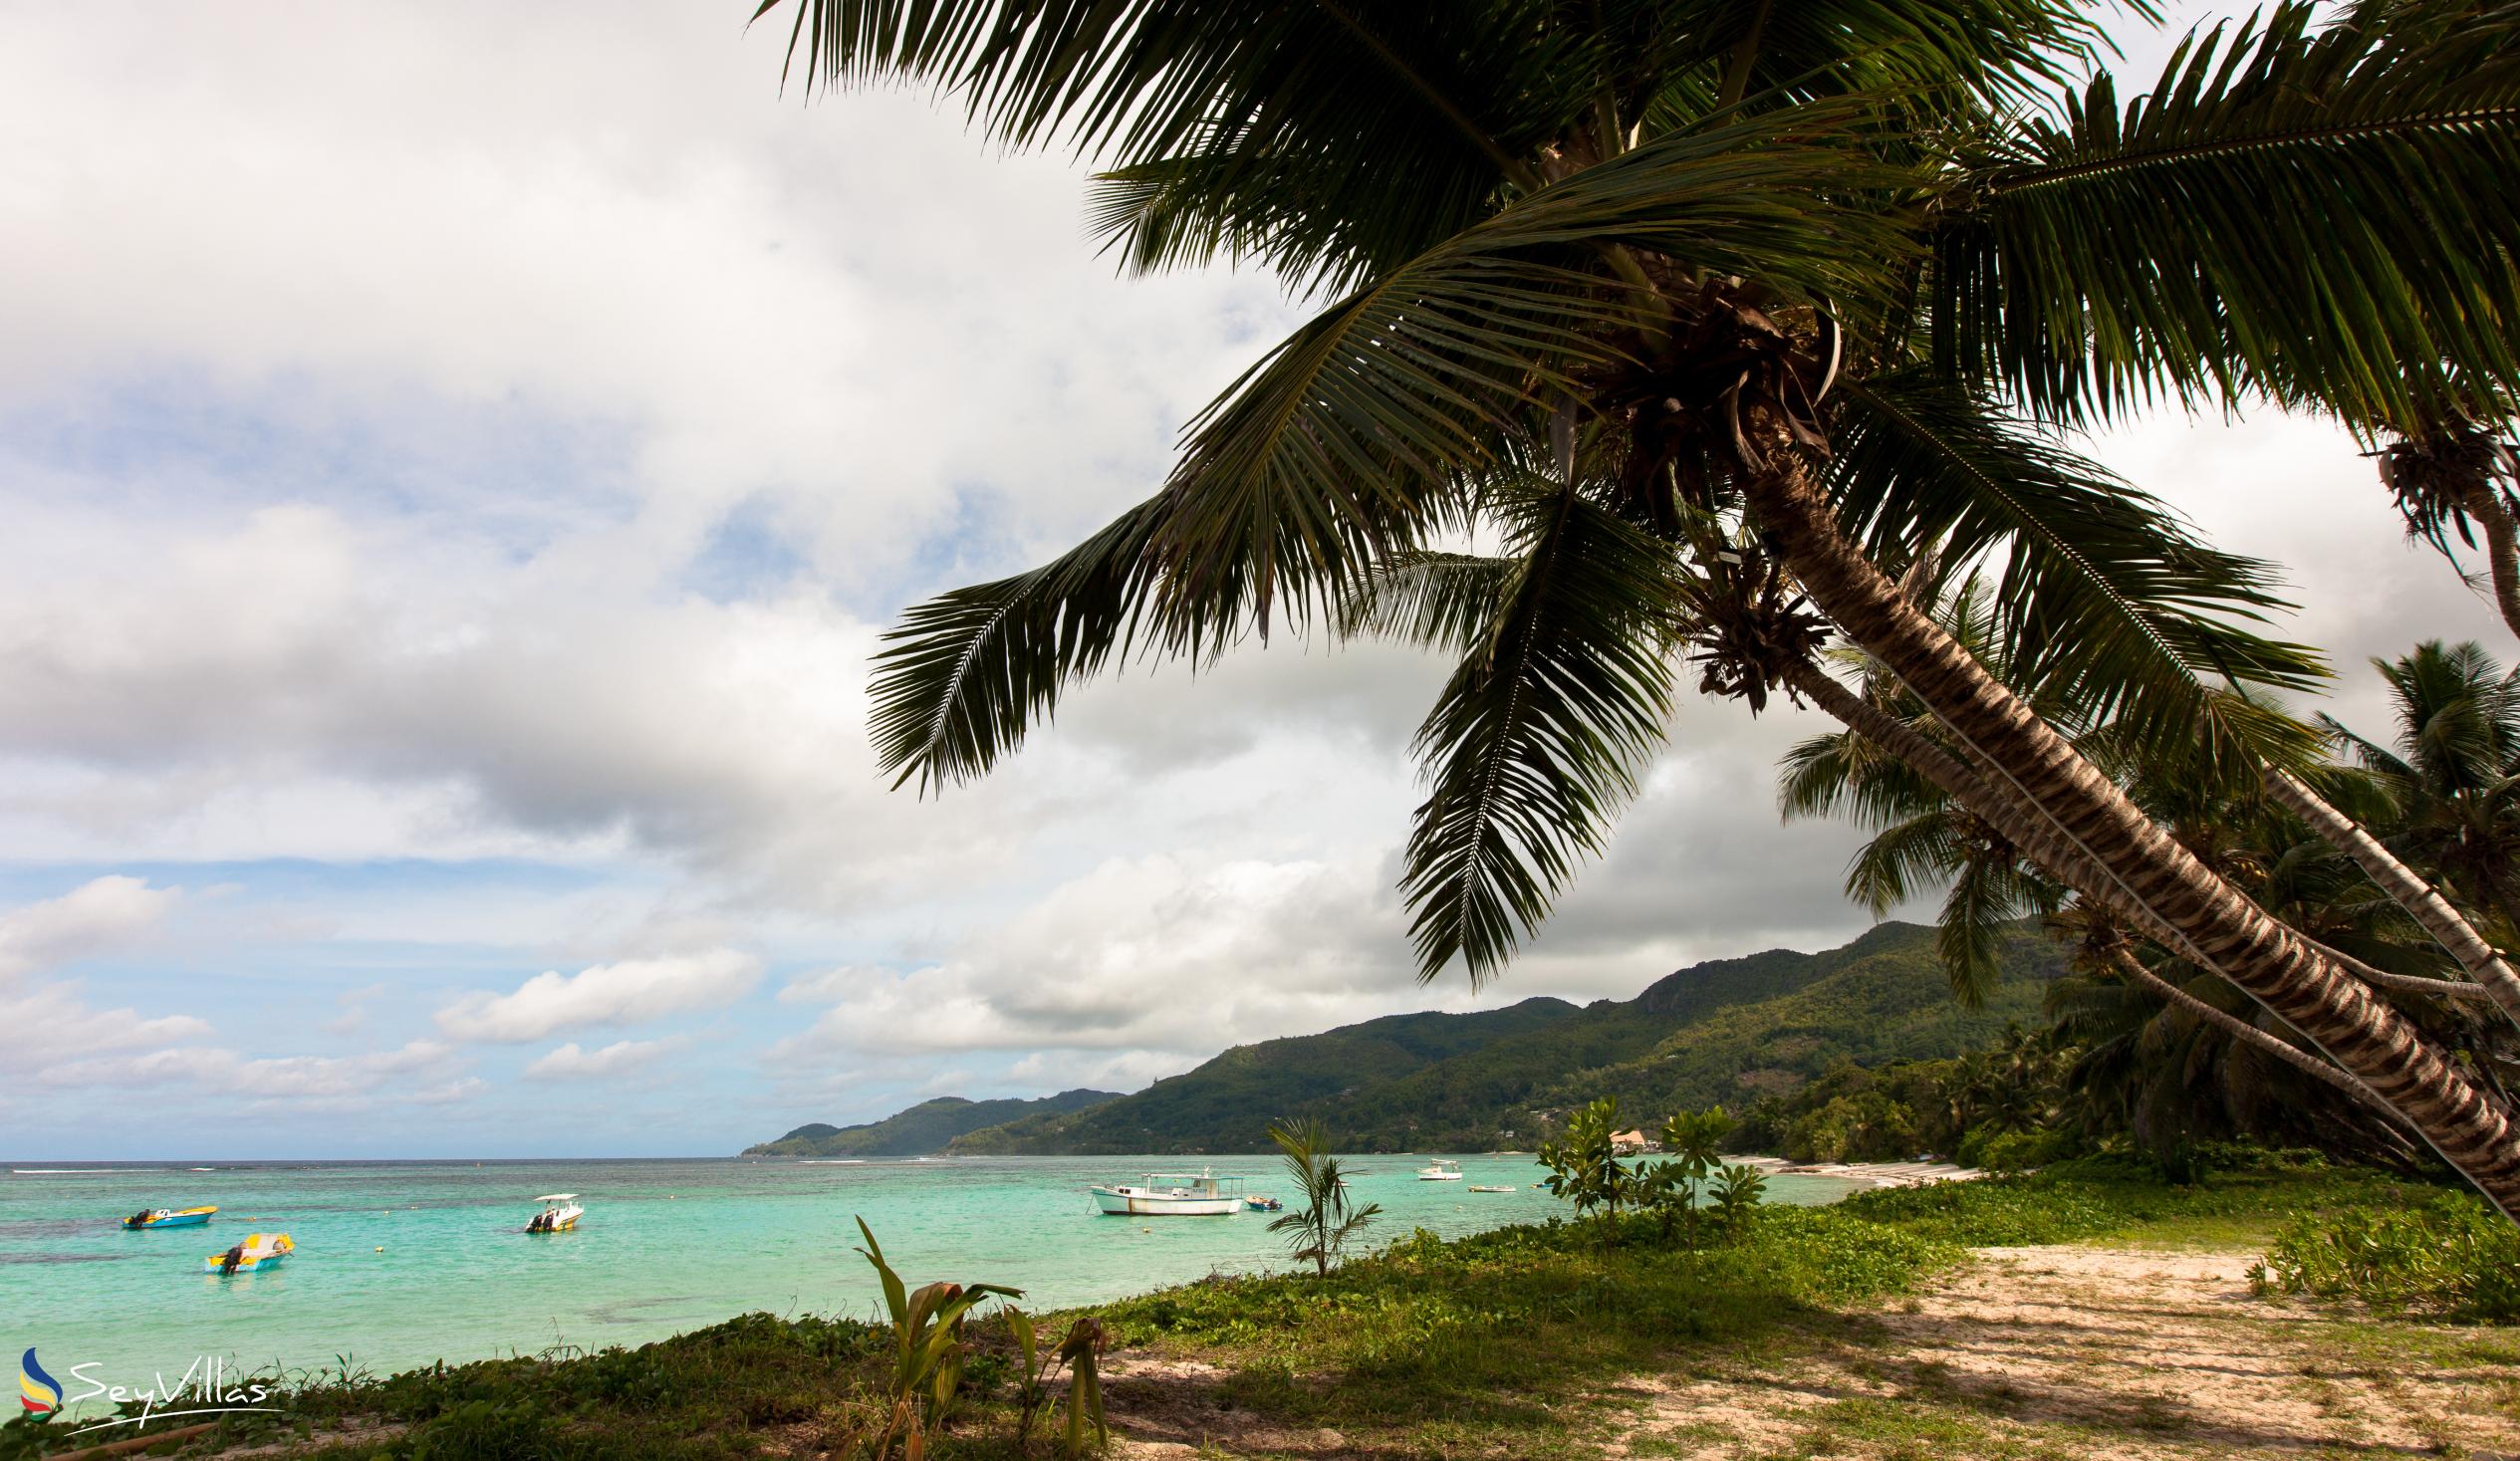 Photo 16: La Villa Therese Holiday Apartments - Beaches - Mahé (Seychelles)